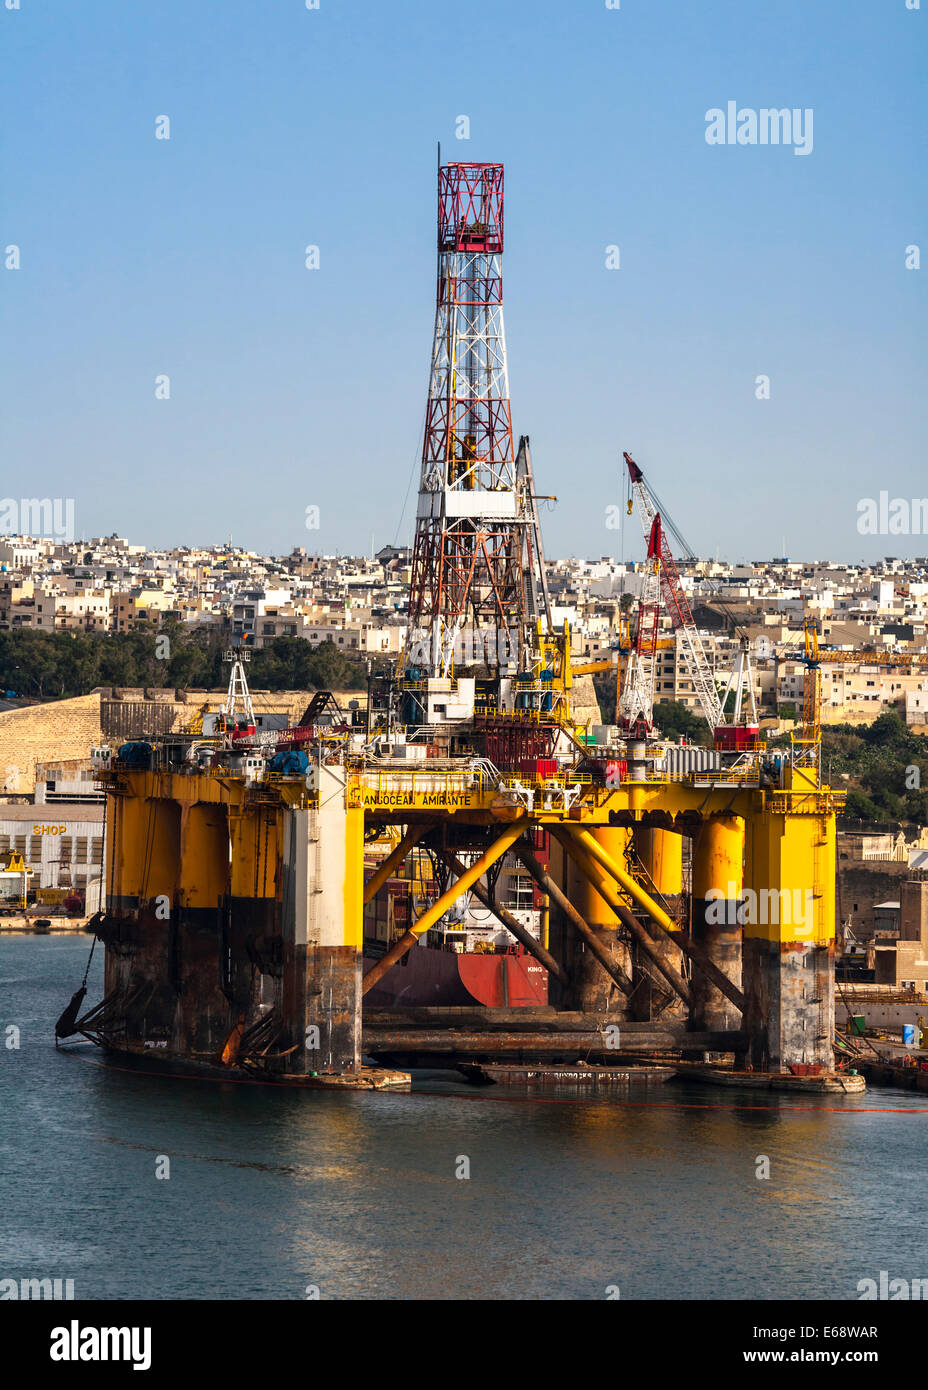 Oil/Gas rig under construction, Grand Harbour, Valletta, Malta. Stock Photo